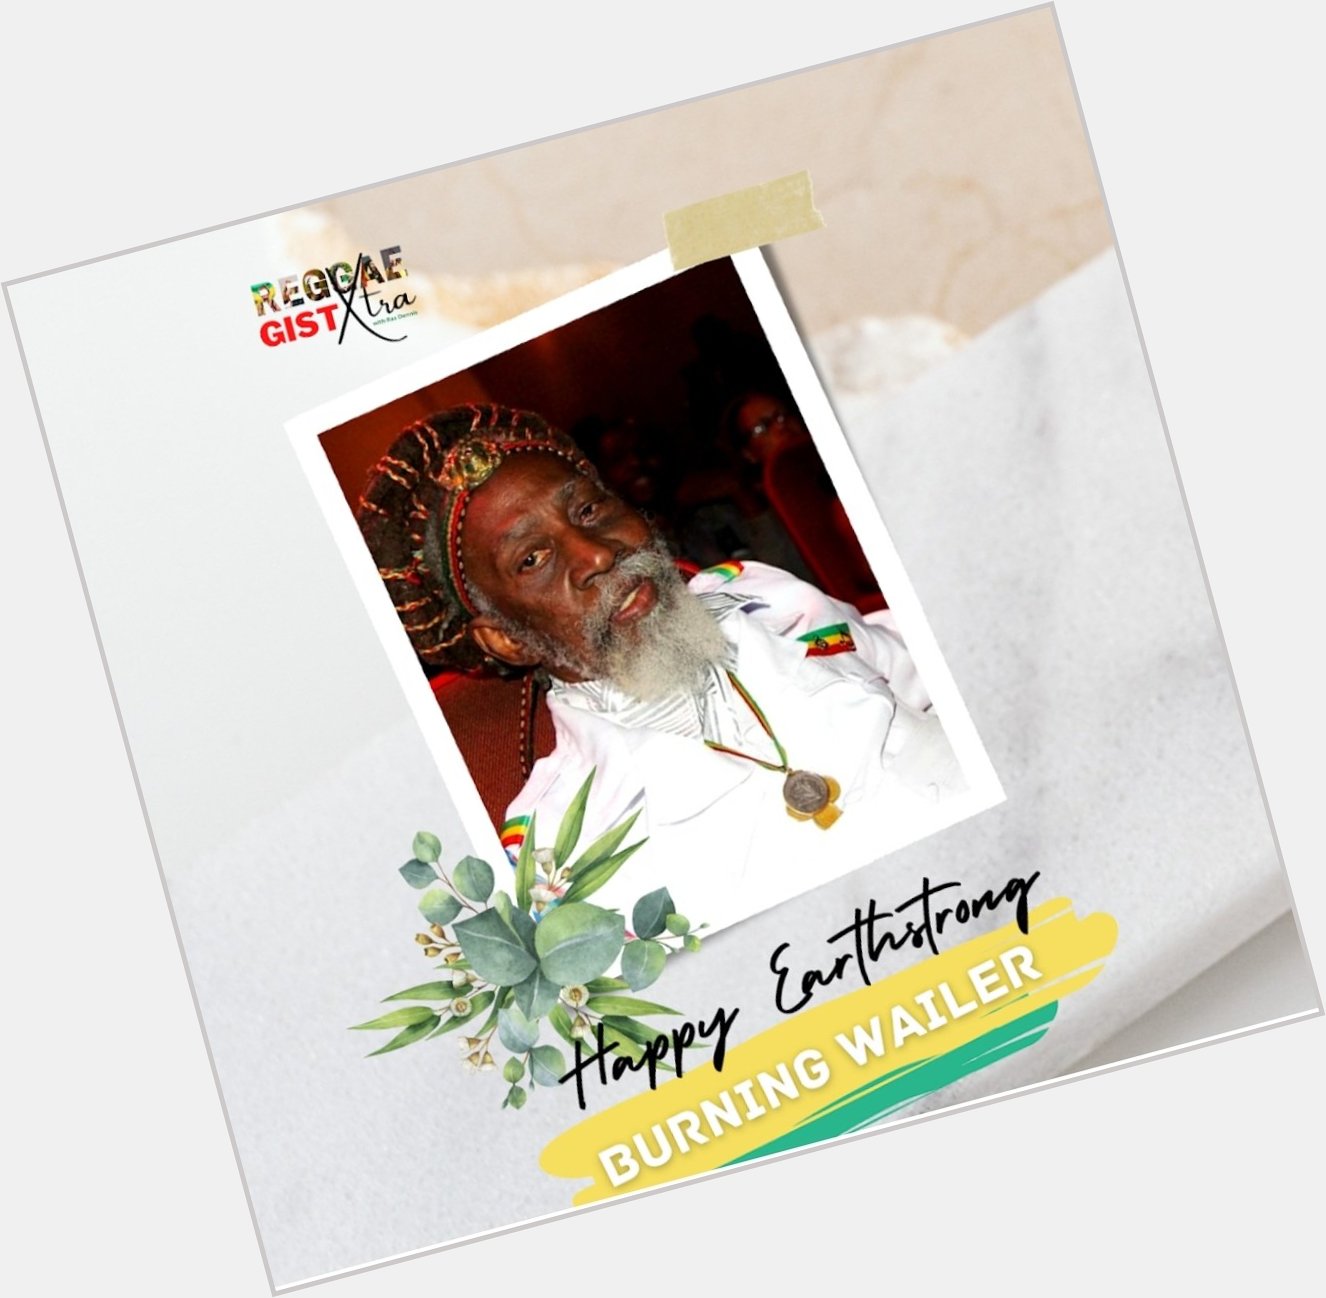 Happy birthday to the last of the original Wailers, Bunny Wailer (1947-2021). 